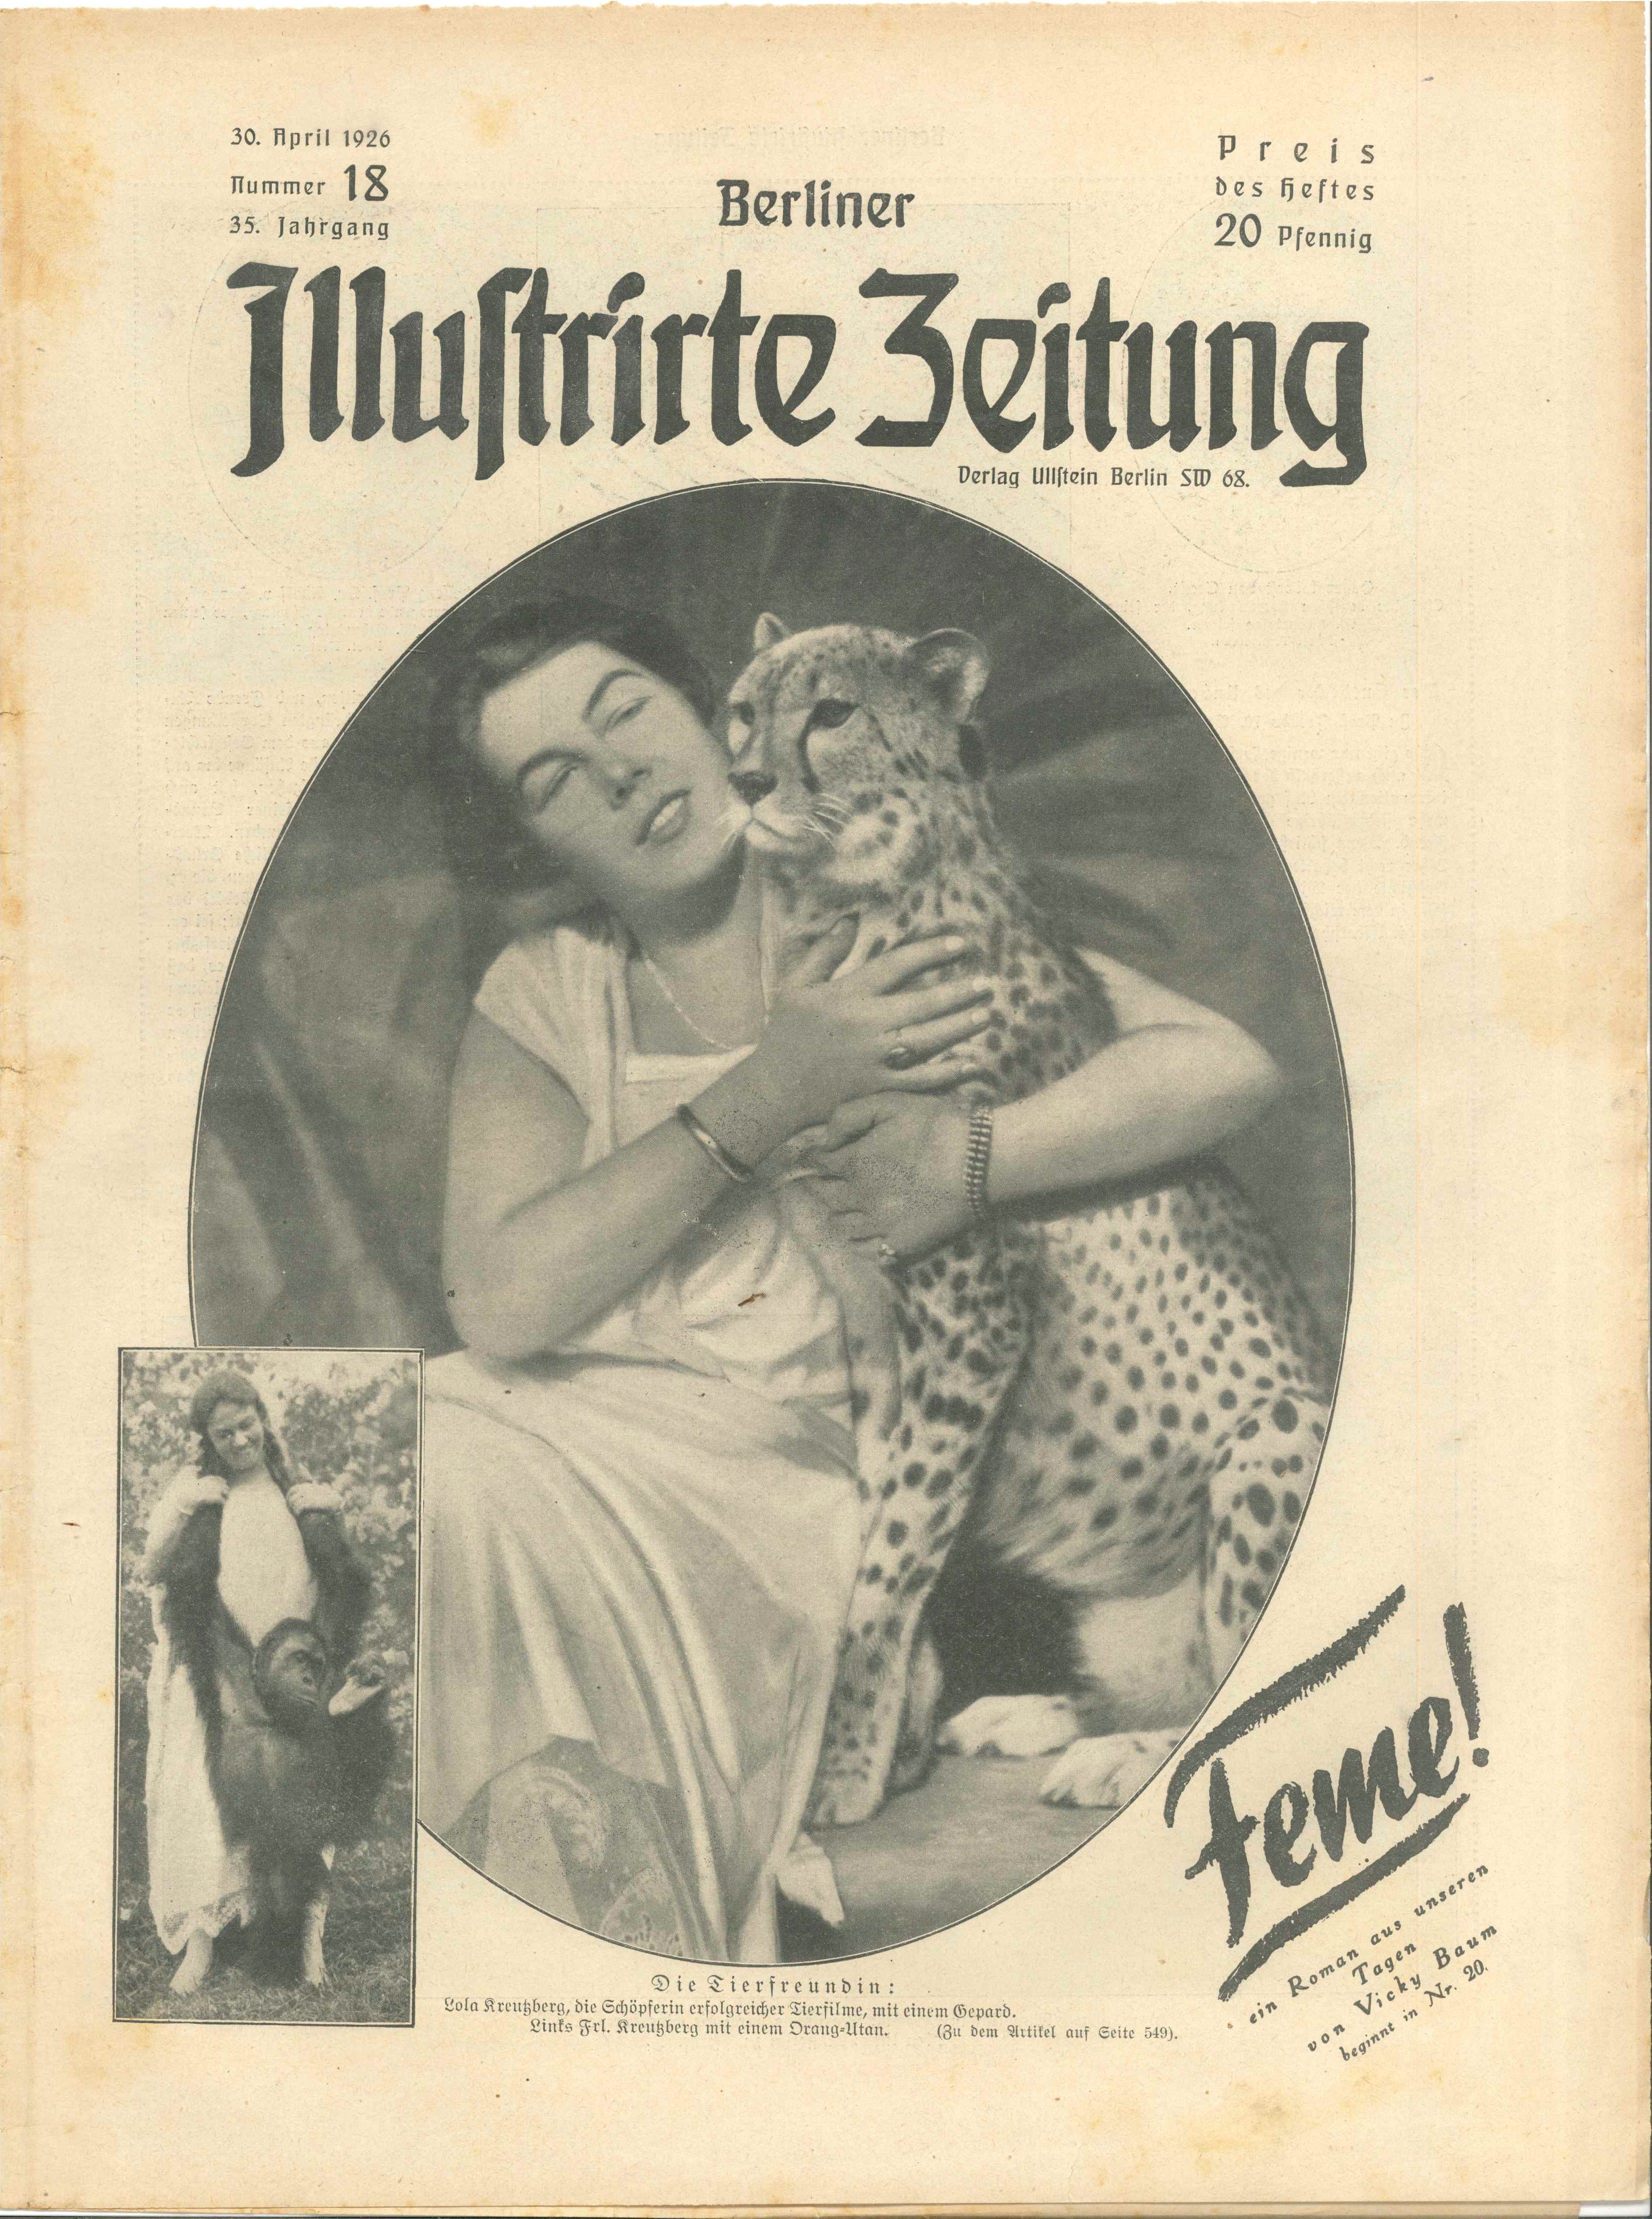 BIZ, Nr. 18, 1926, Titelseite (Kurt Tucholsky Literaturmuseum CC BY-NC-SA)